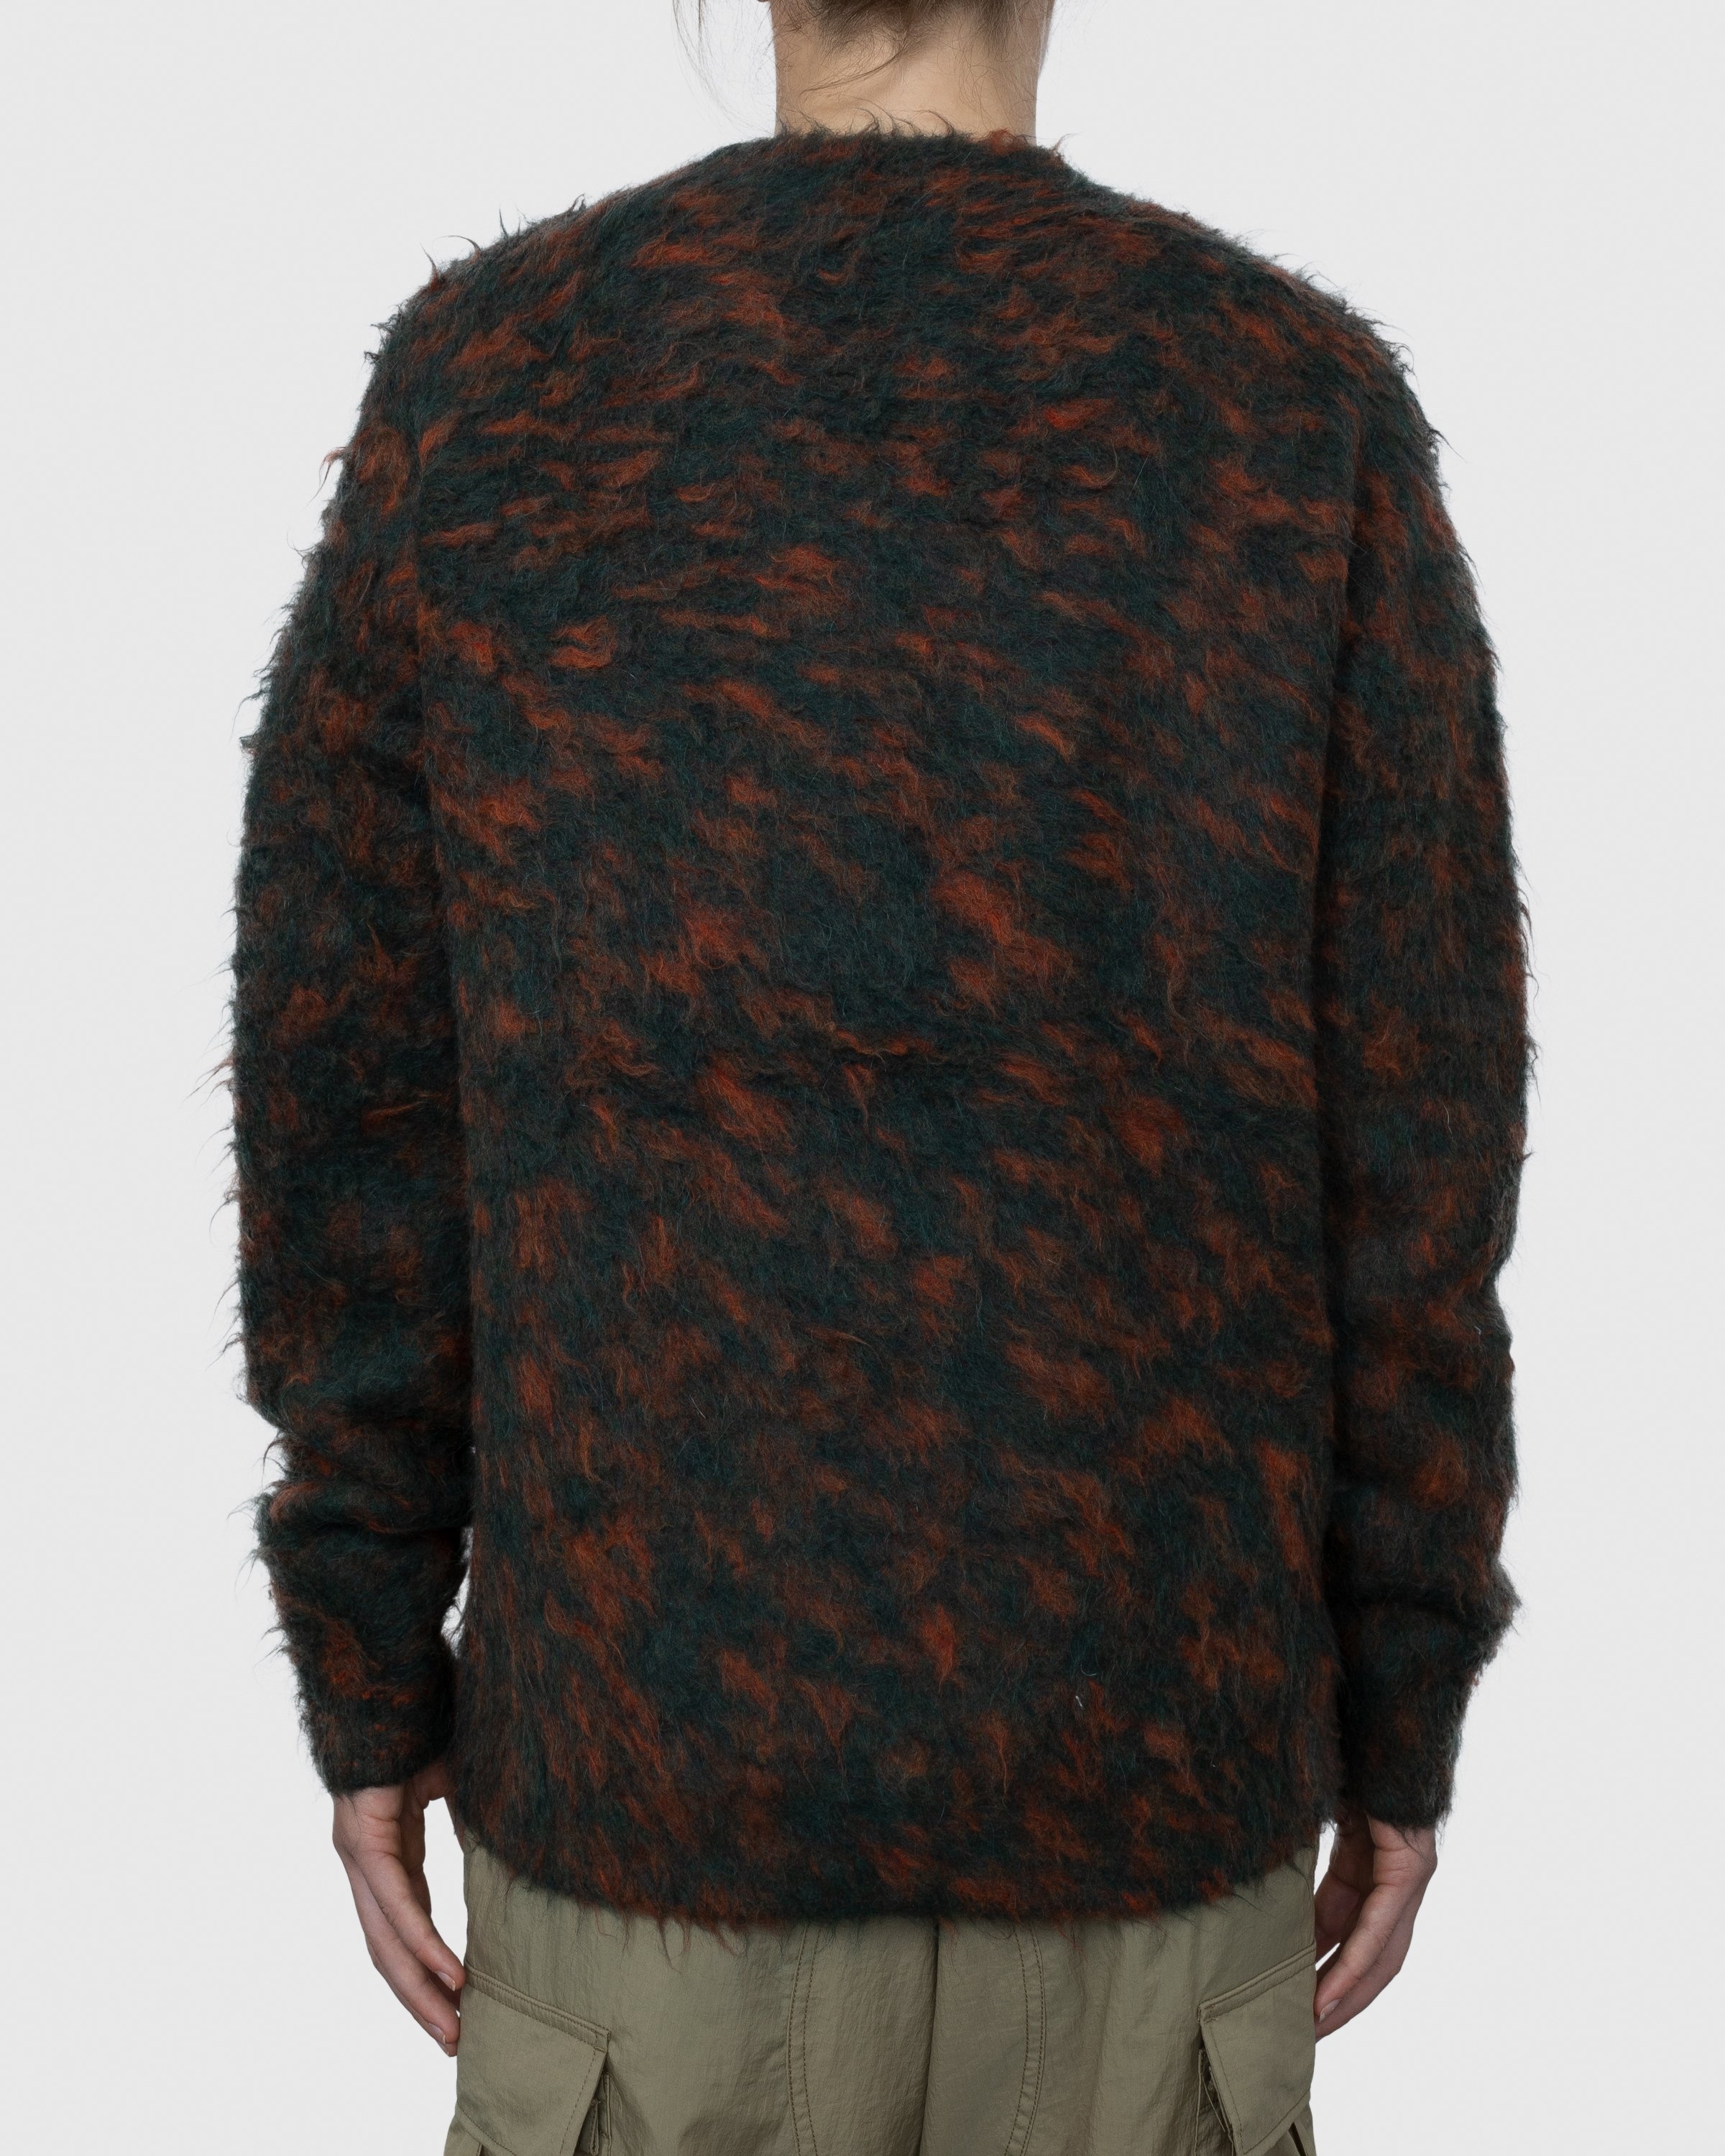 Acne Studios – Hairy Crewneck Sweater Green - Knitwear - Green - Image 3